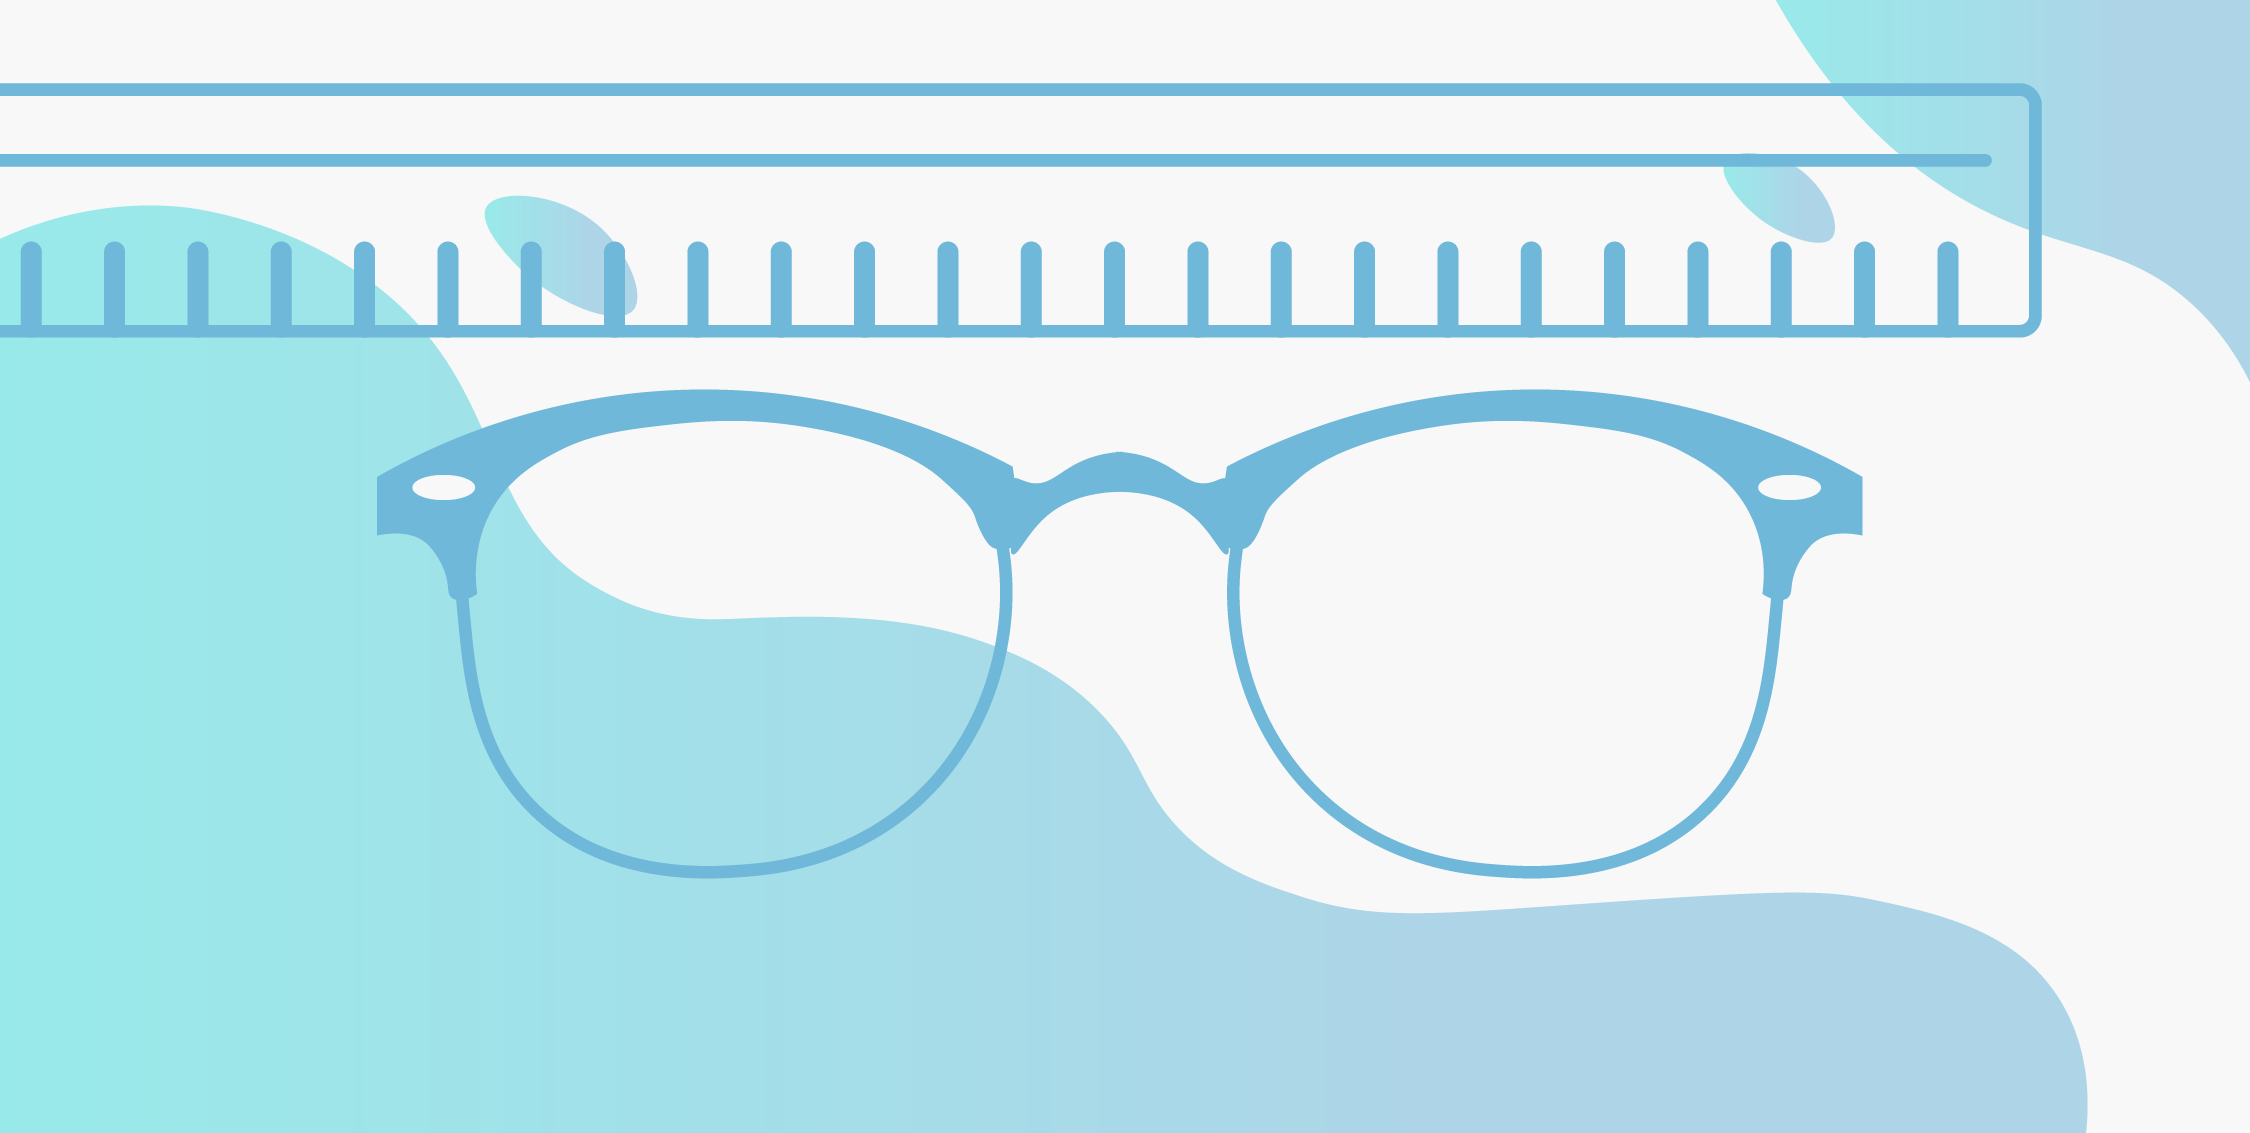 Sunglasses Medium Size Chart